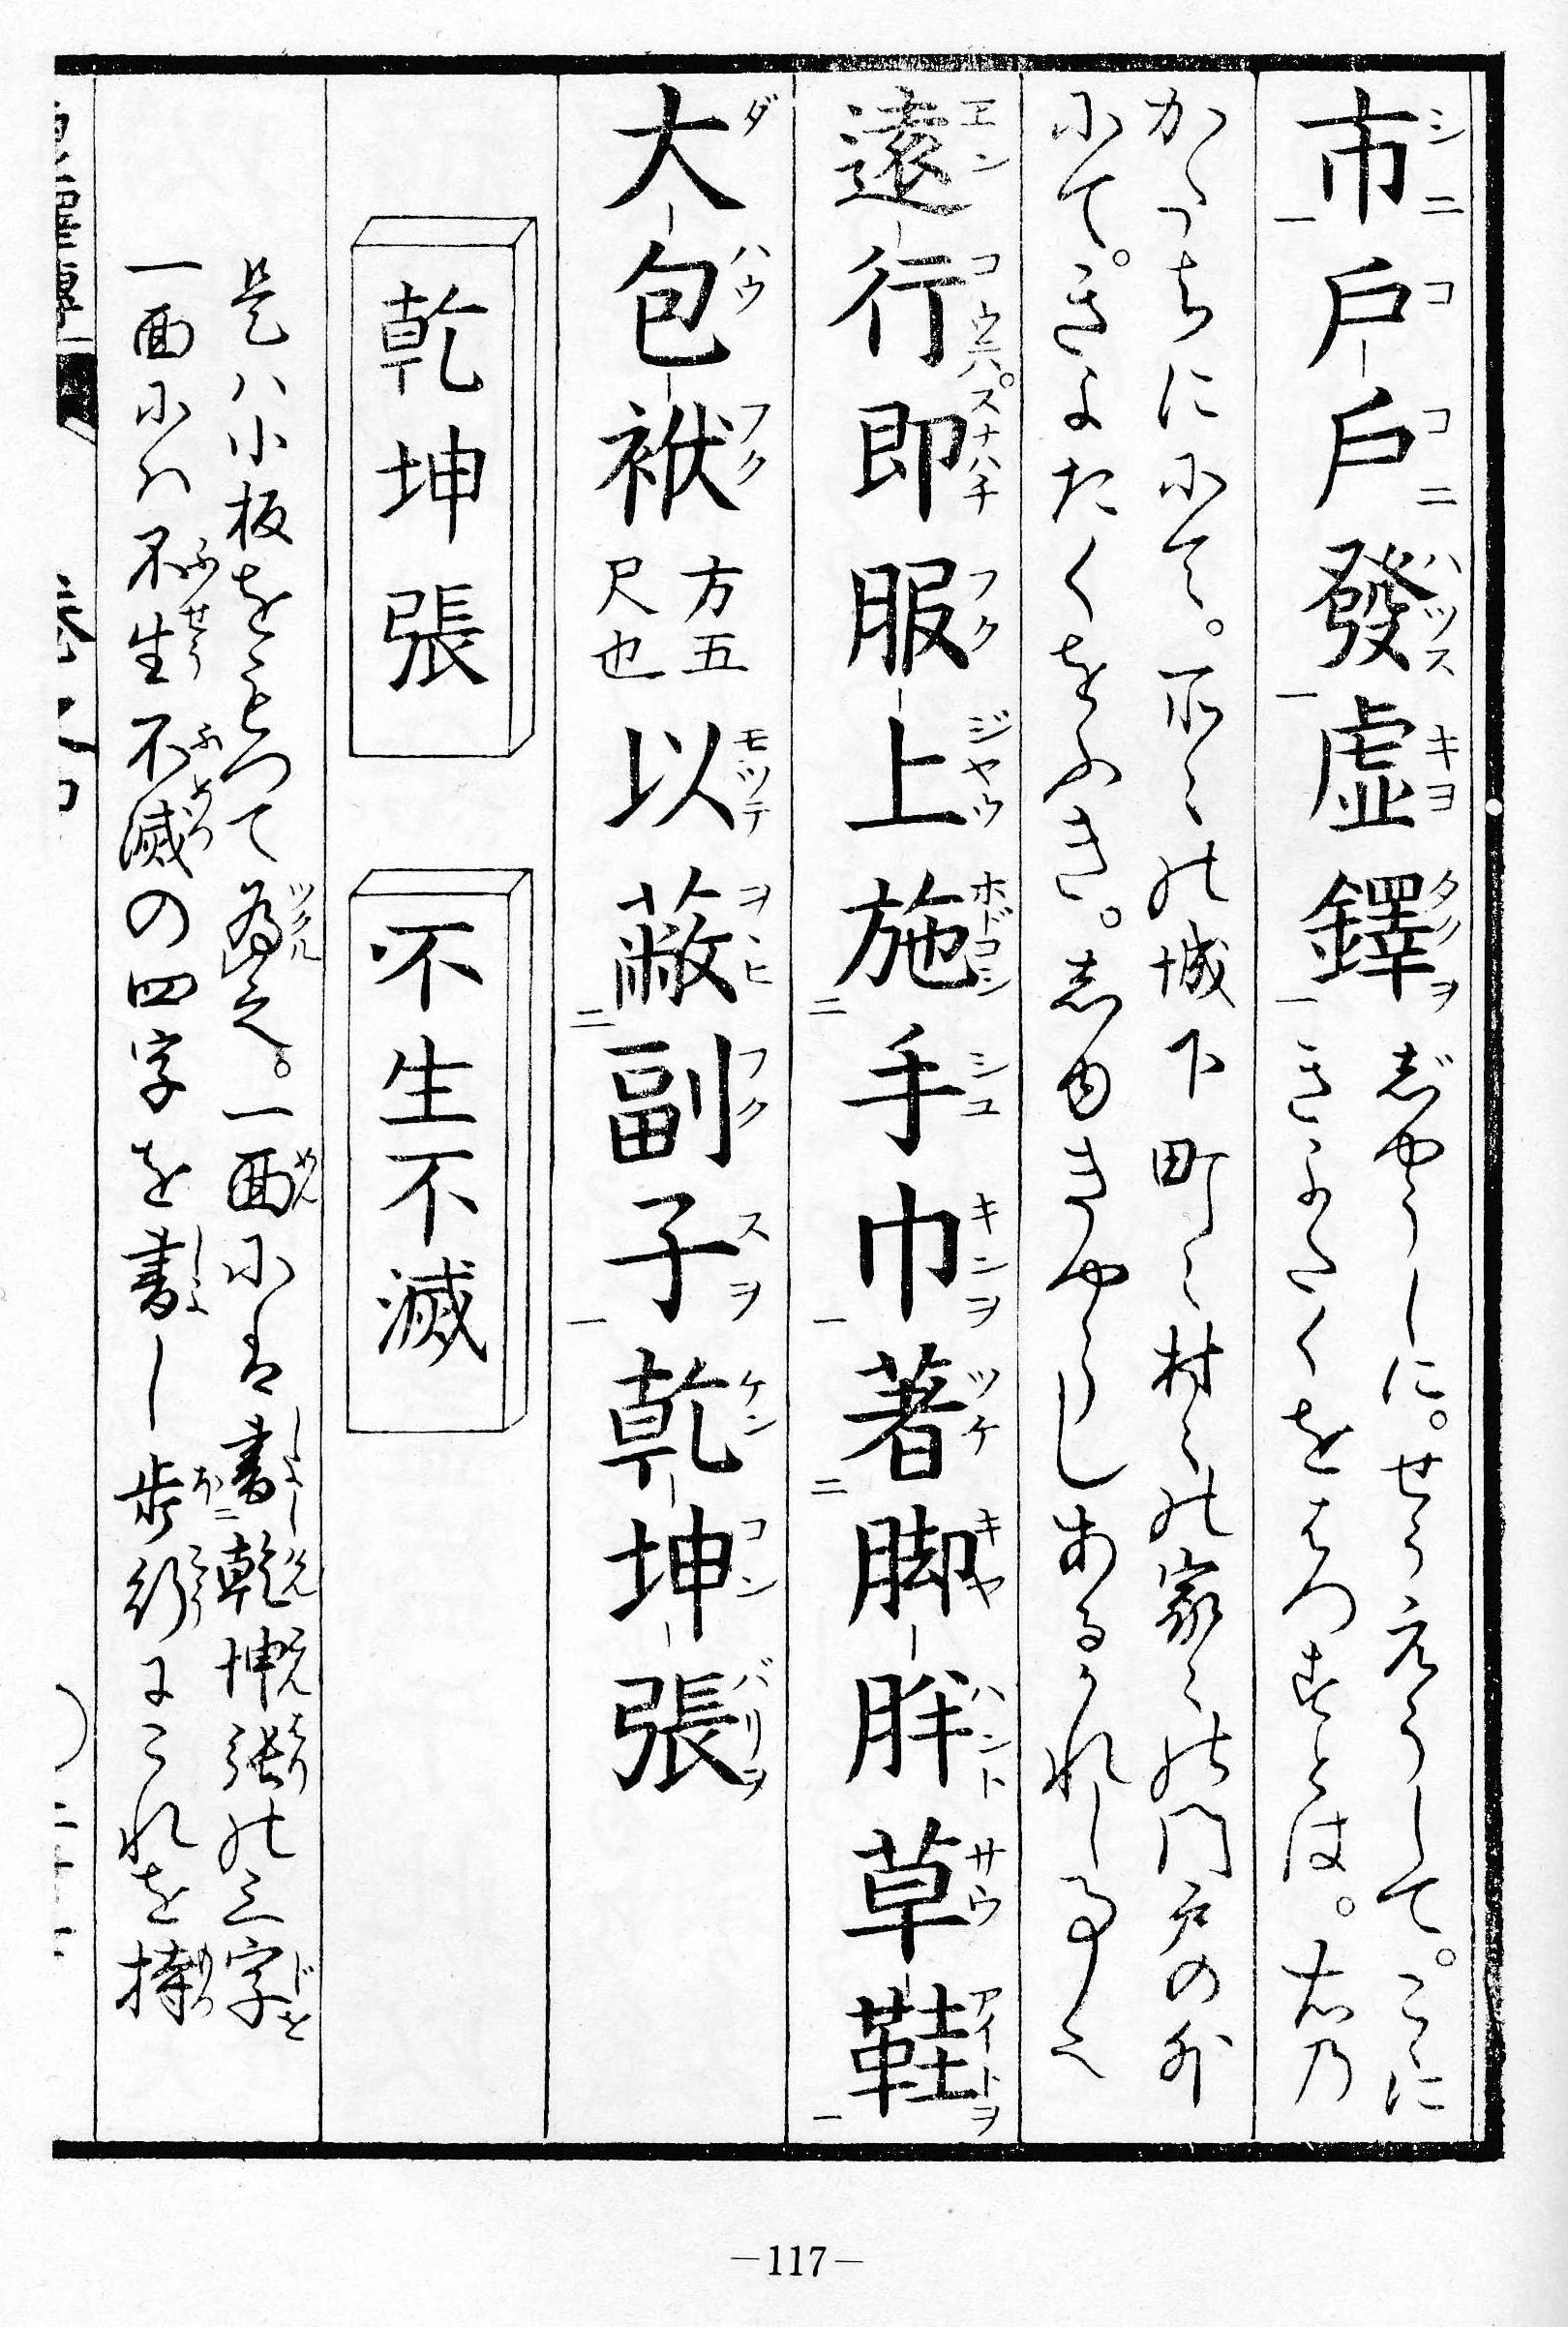 Kyotaku denki, original text in kanbun-a.